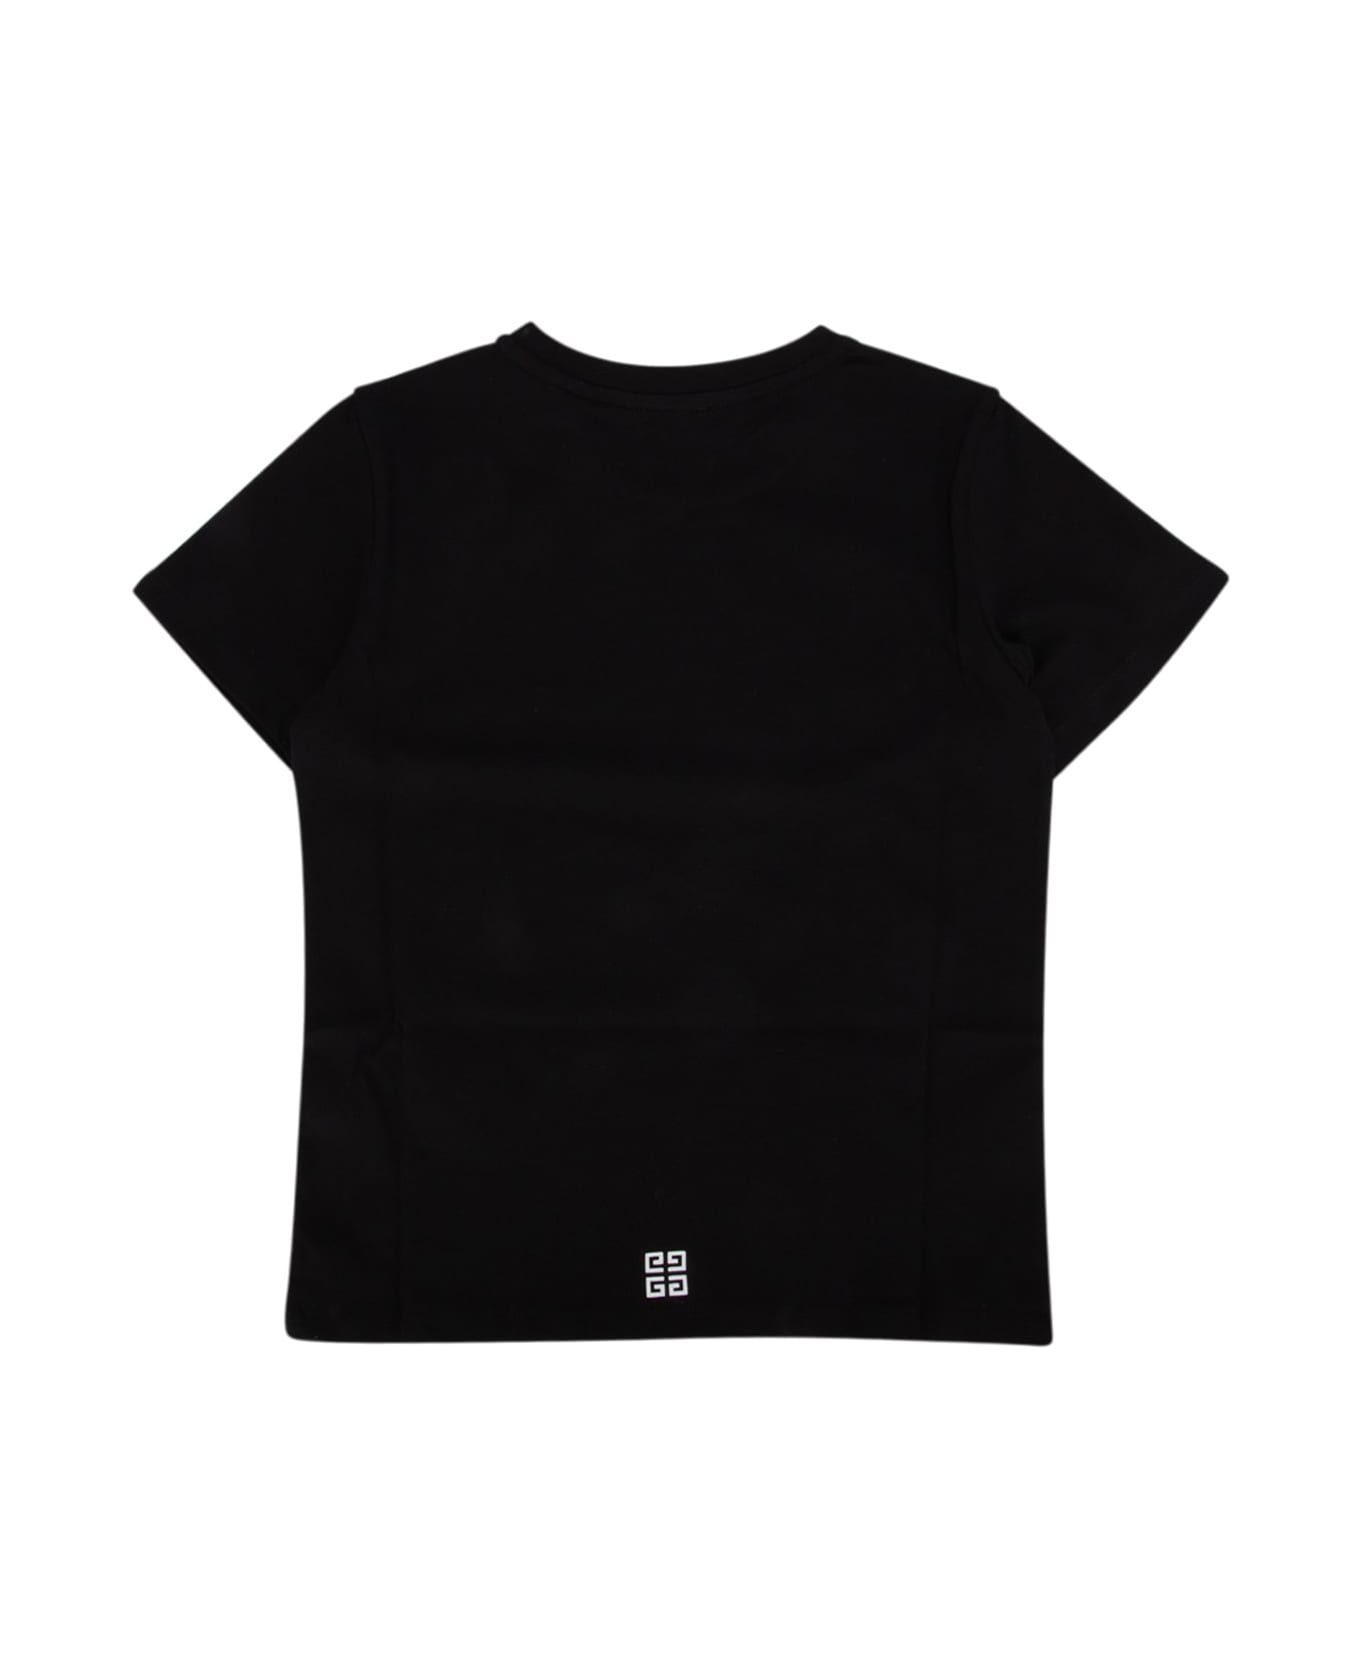 Givenchy T-shirt - Black Tシャツ＆ポロシャツ